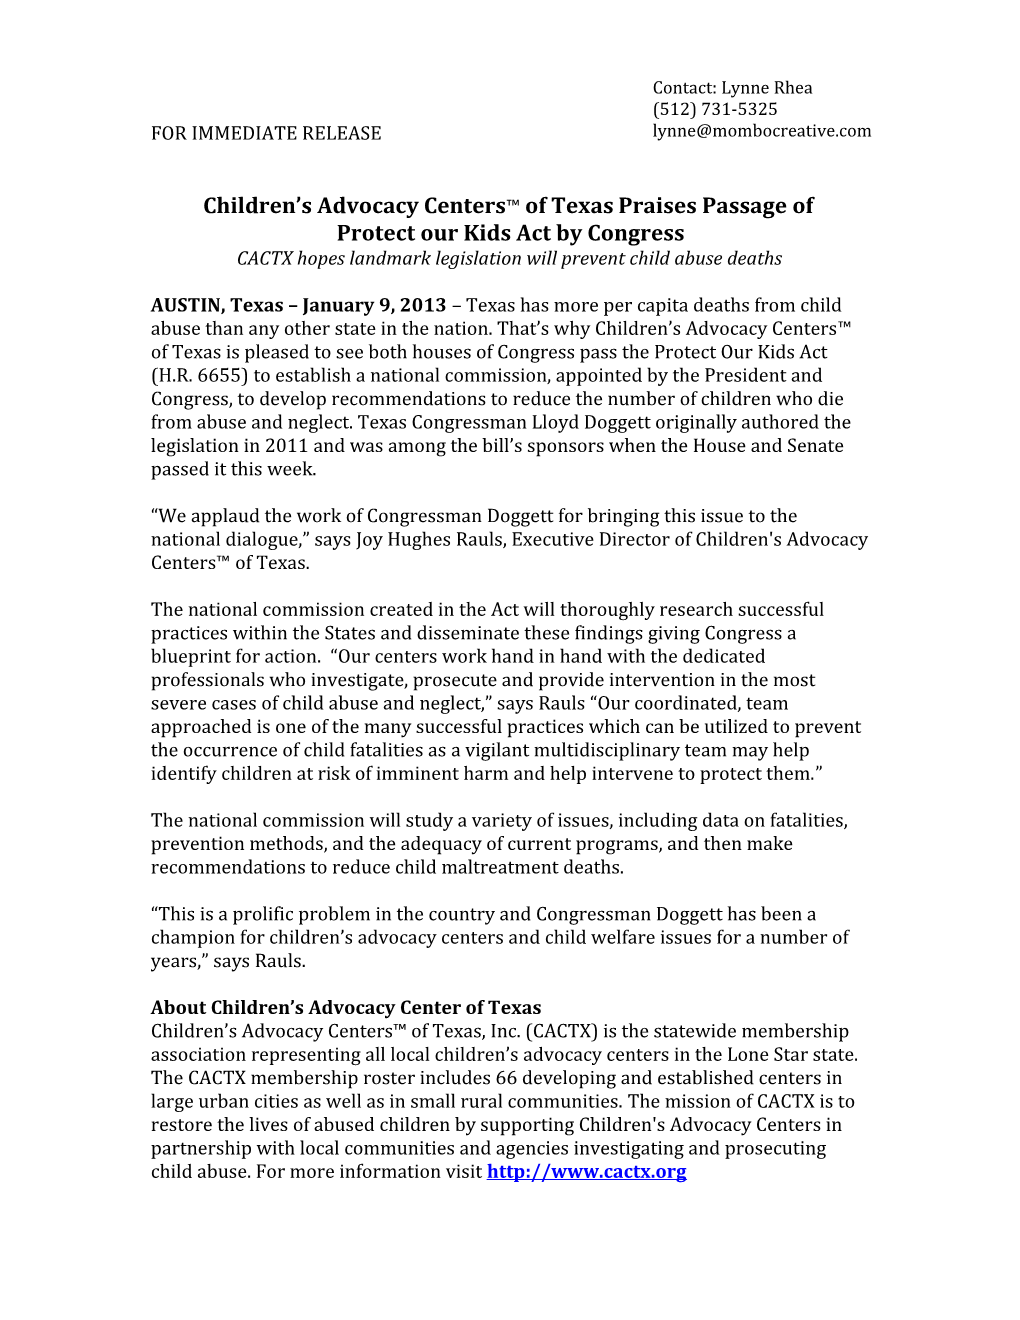 Children S Advocacy Centers of Texaspraises Passage Of